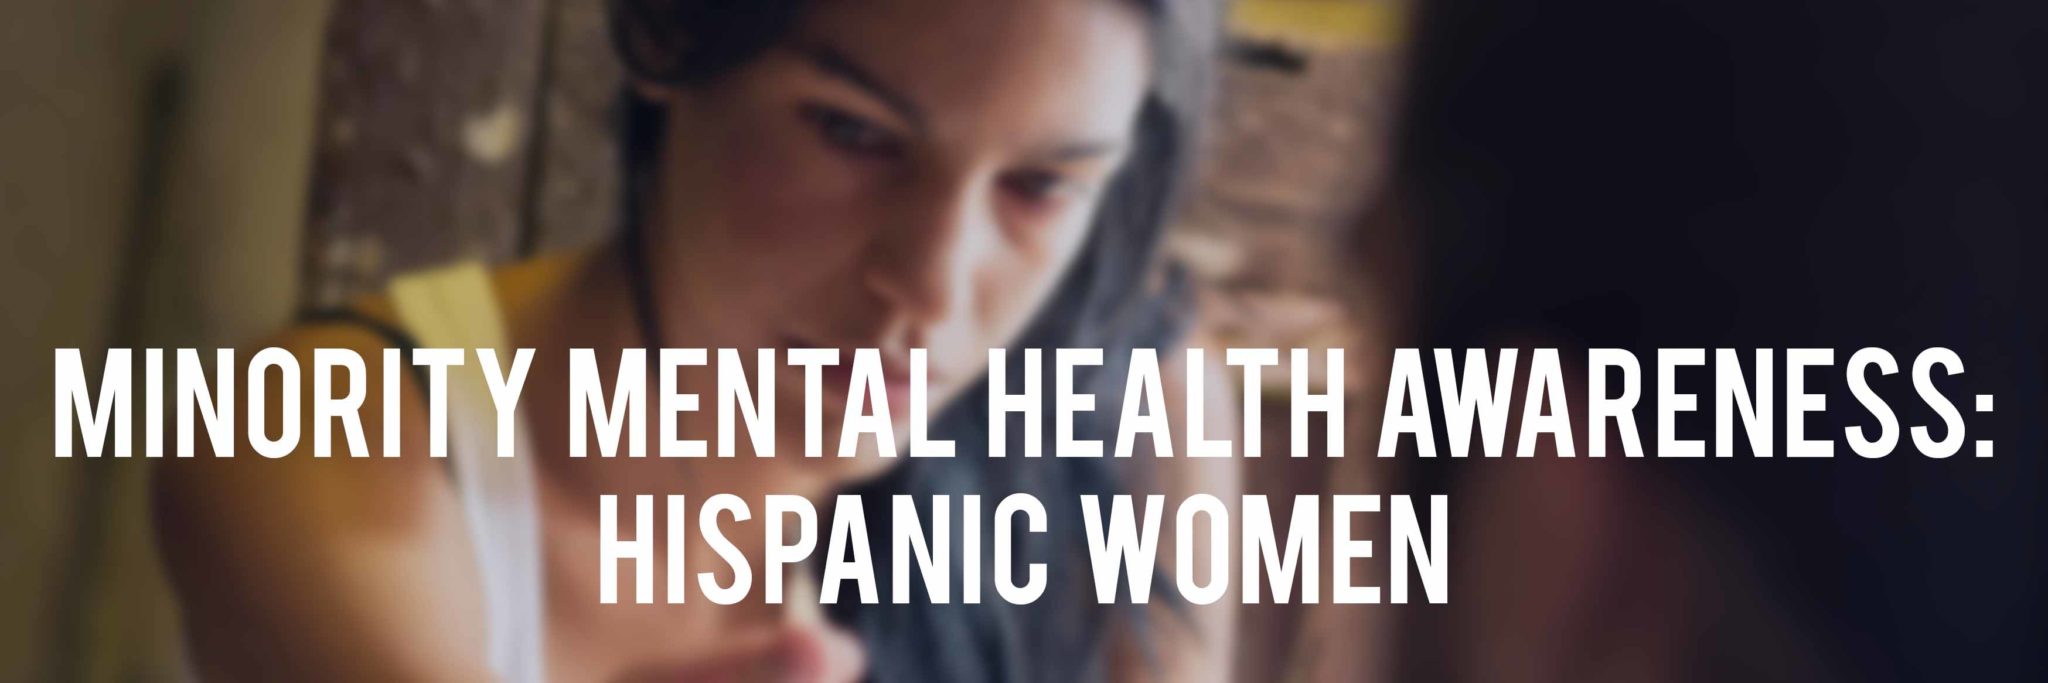 image of hispanic mental health statistics for women